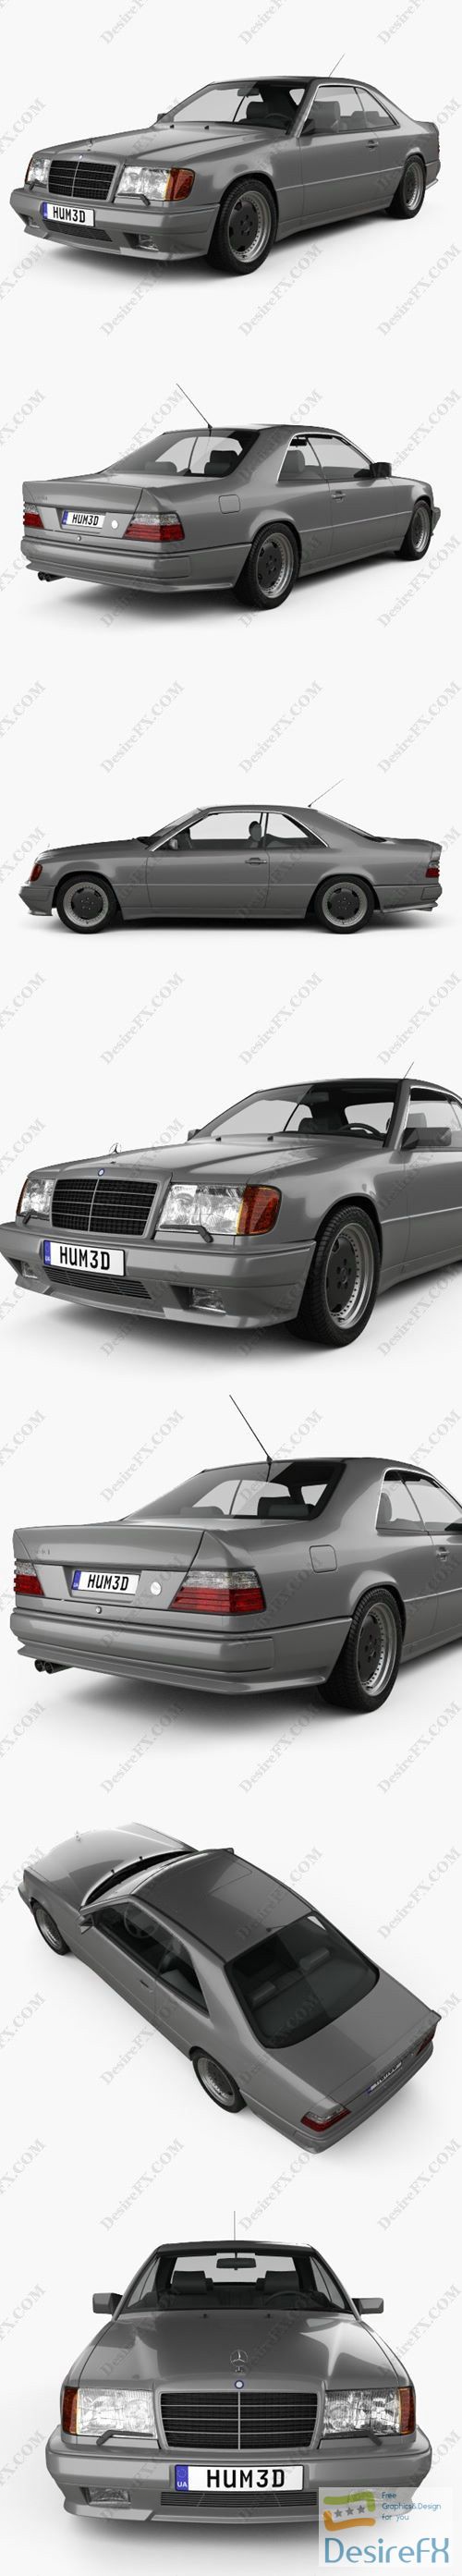 Mercedes-Benz E-Class AMG coupe 1988 3D Model